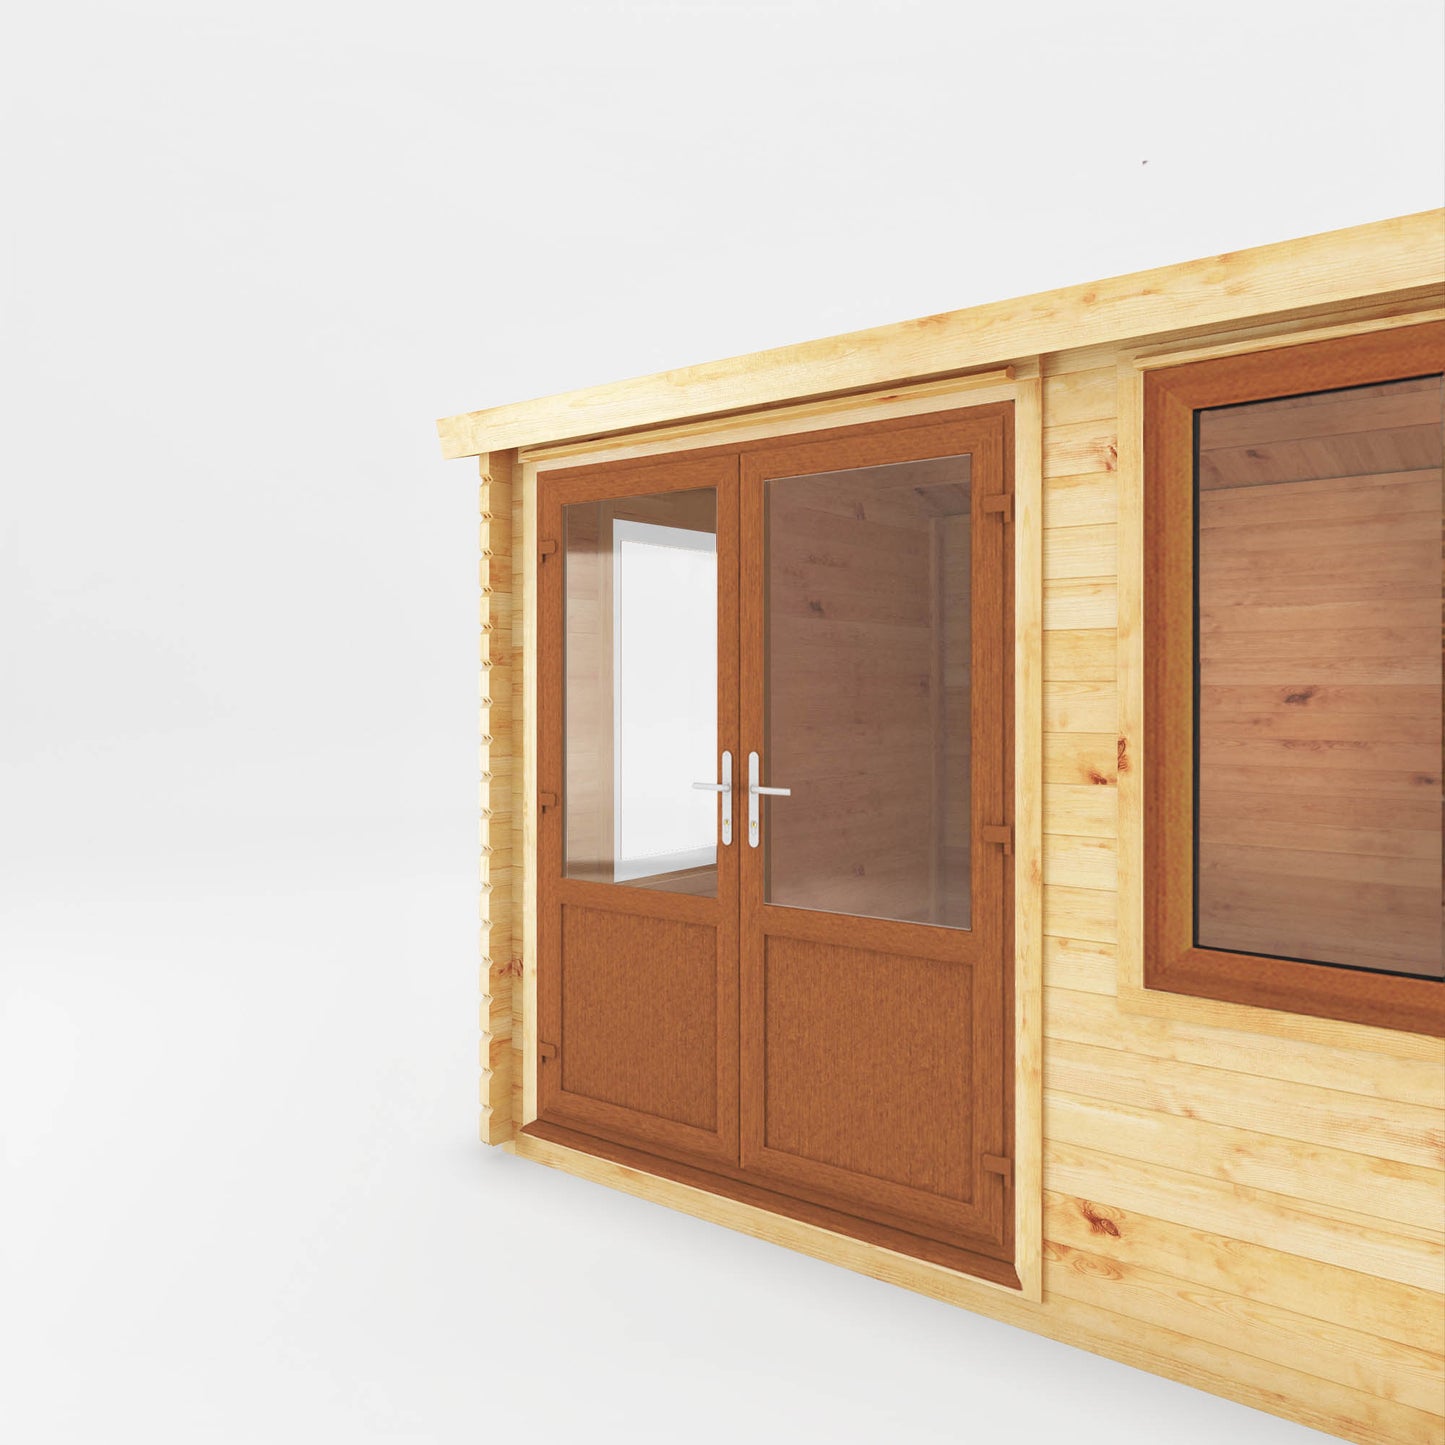 The 3m x 3m Robin Log Cabin with Oak UPVC